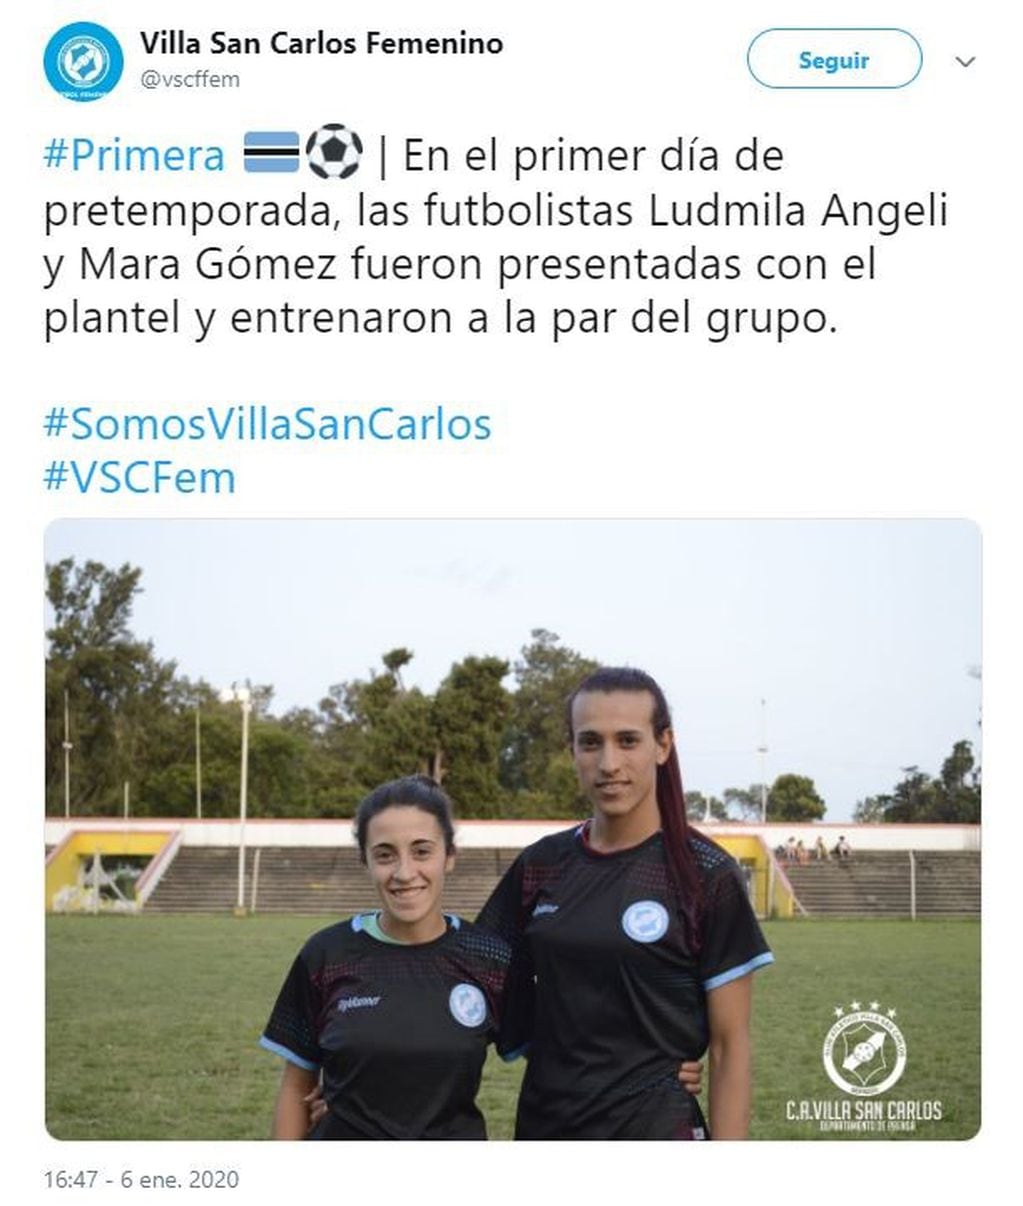 Twitter: Villa San Carlos